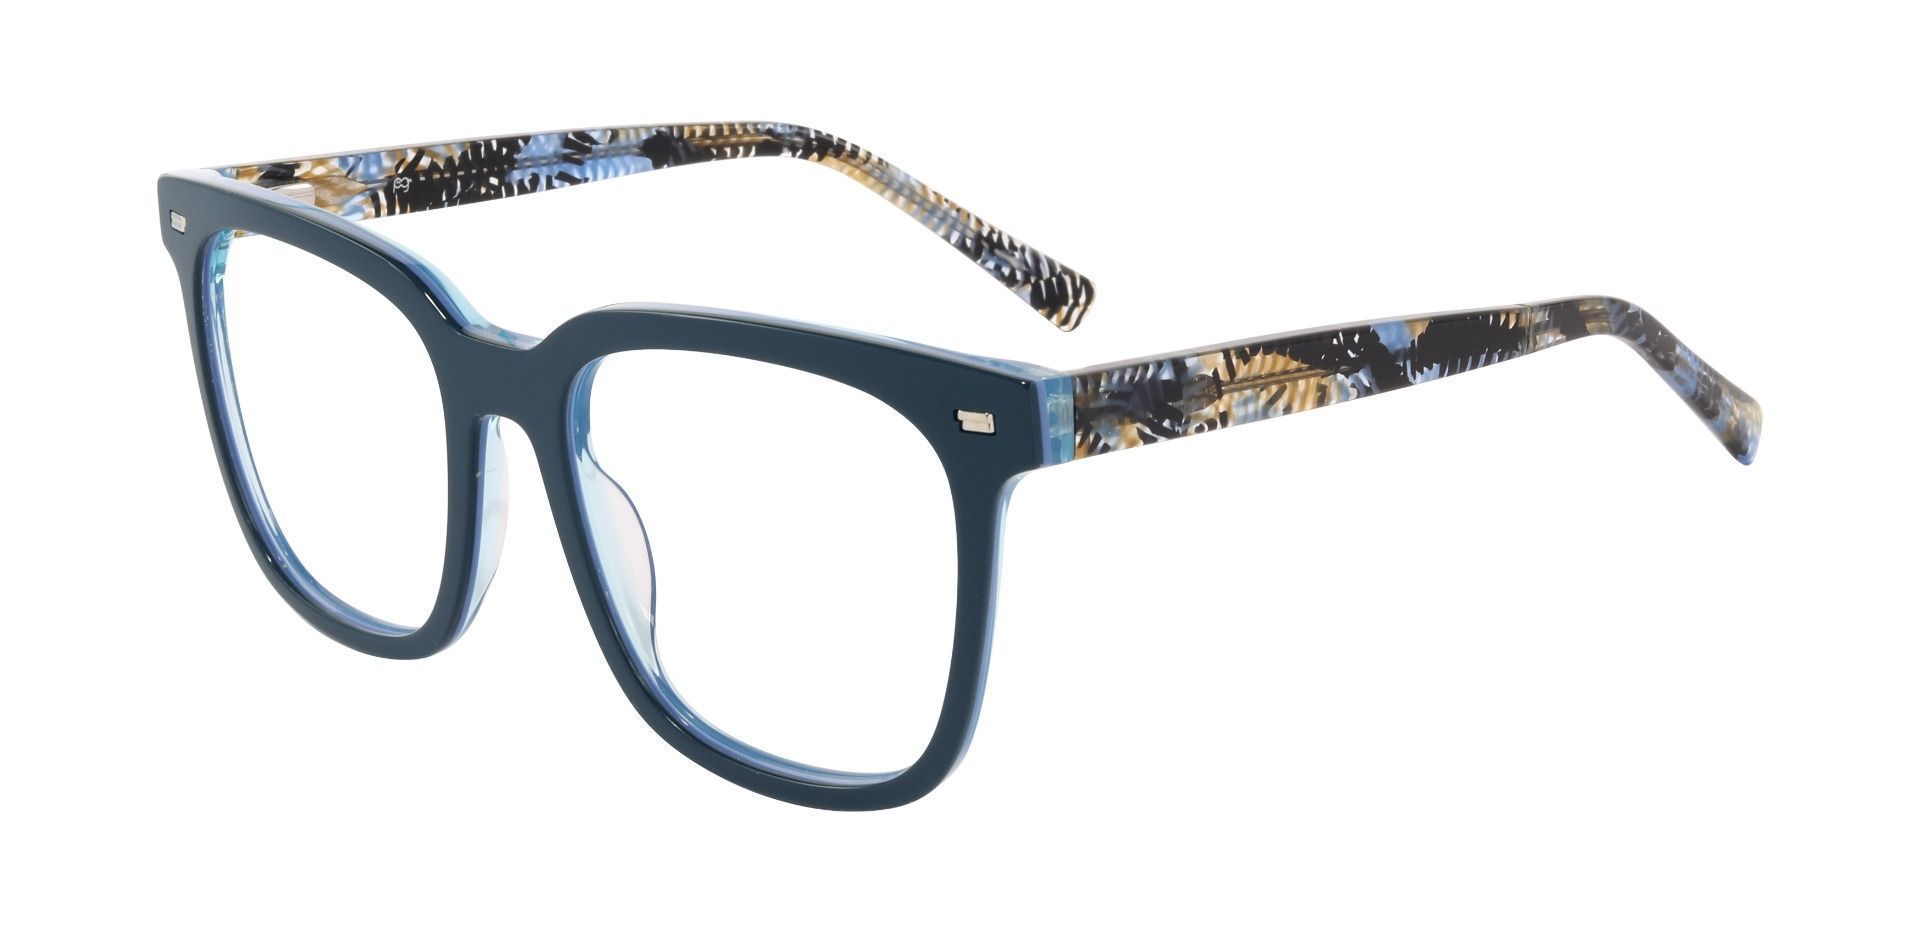 Horton Oversized Square Prescription Glasses - Blue